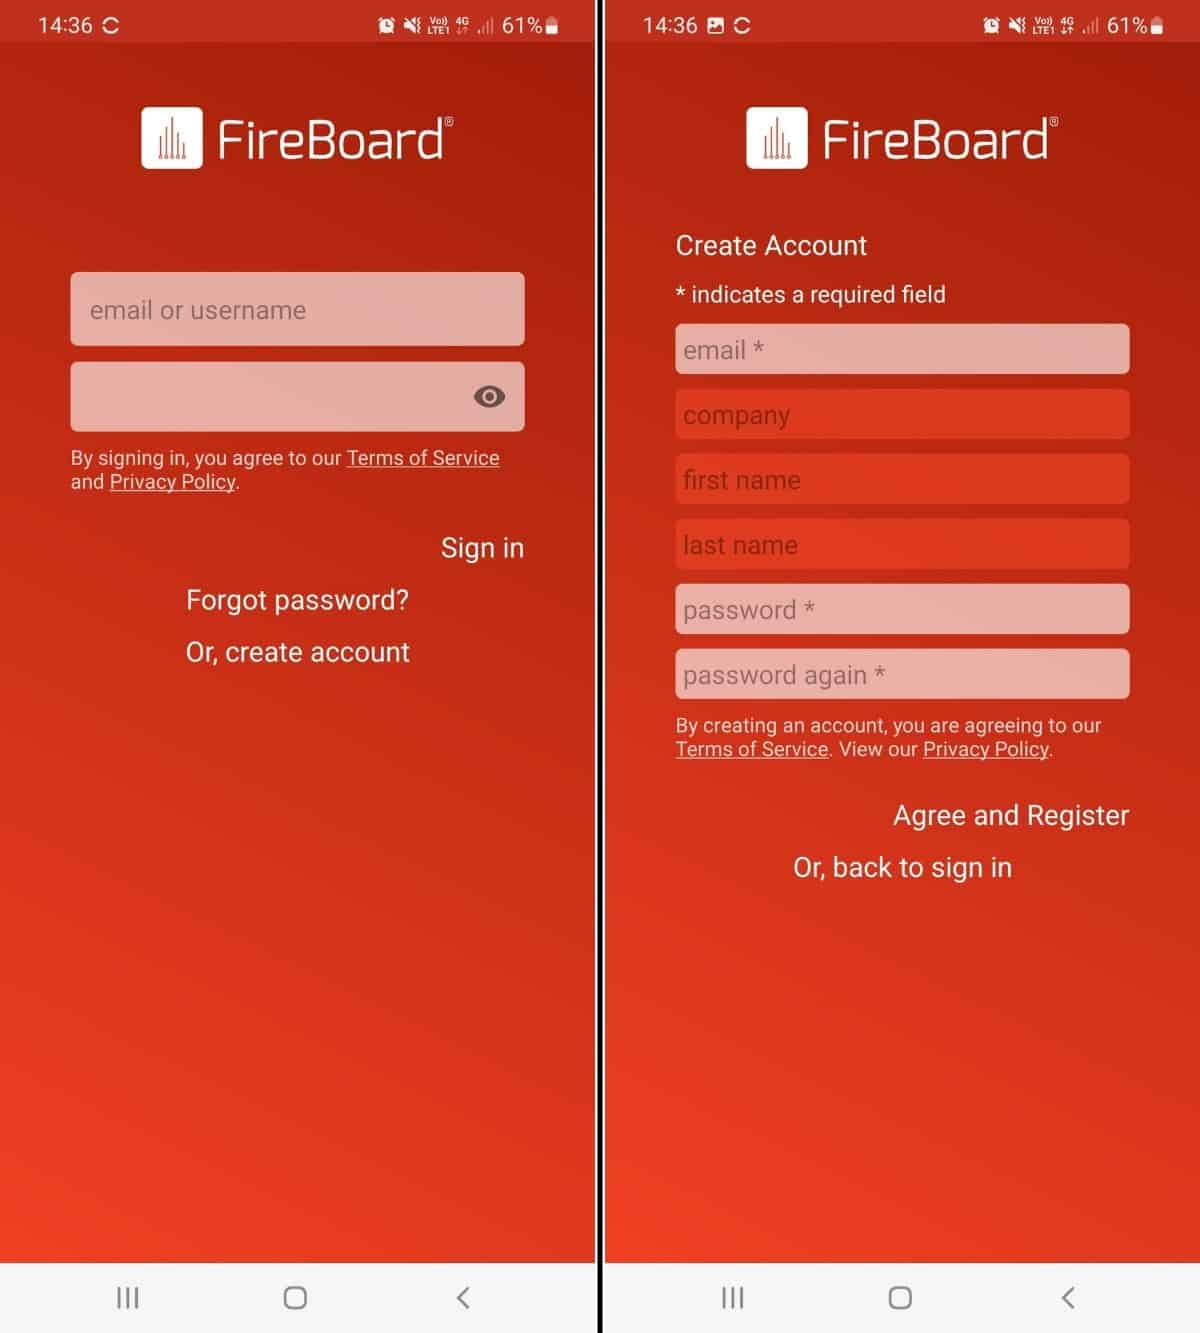 FireBoard app screenshots showing account creation